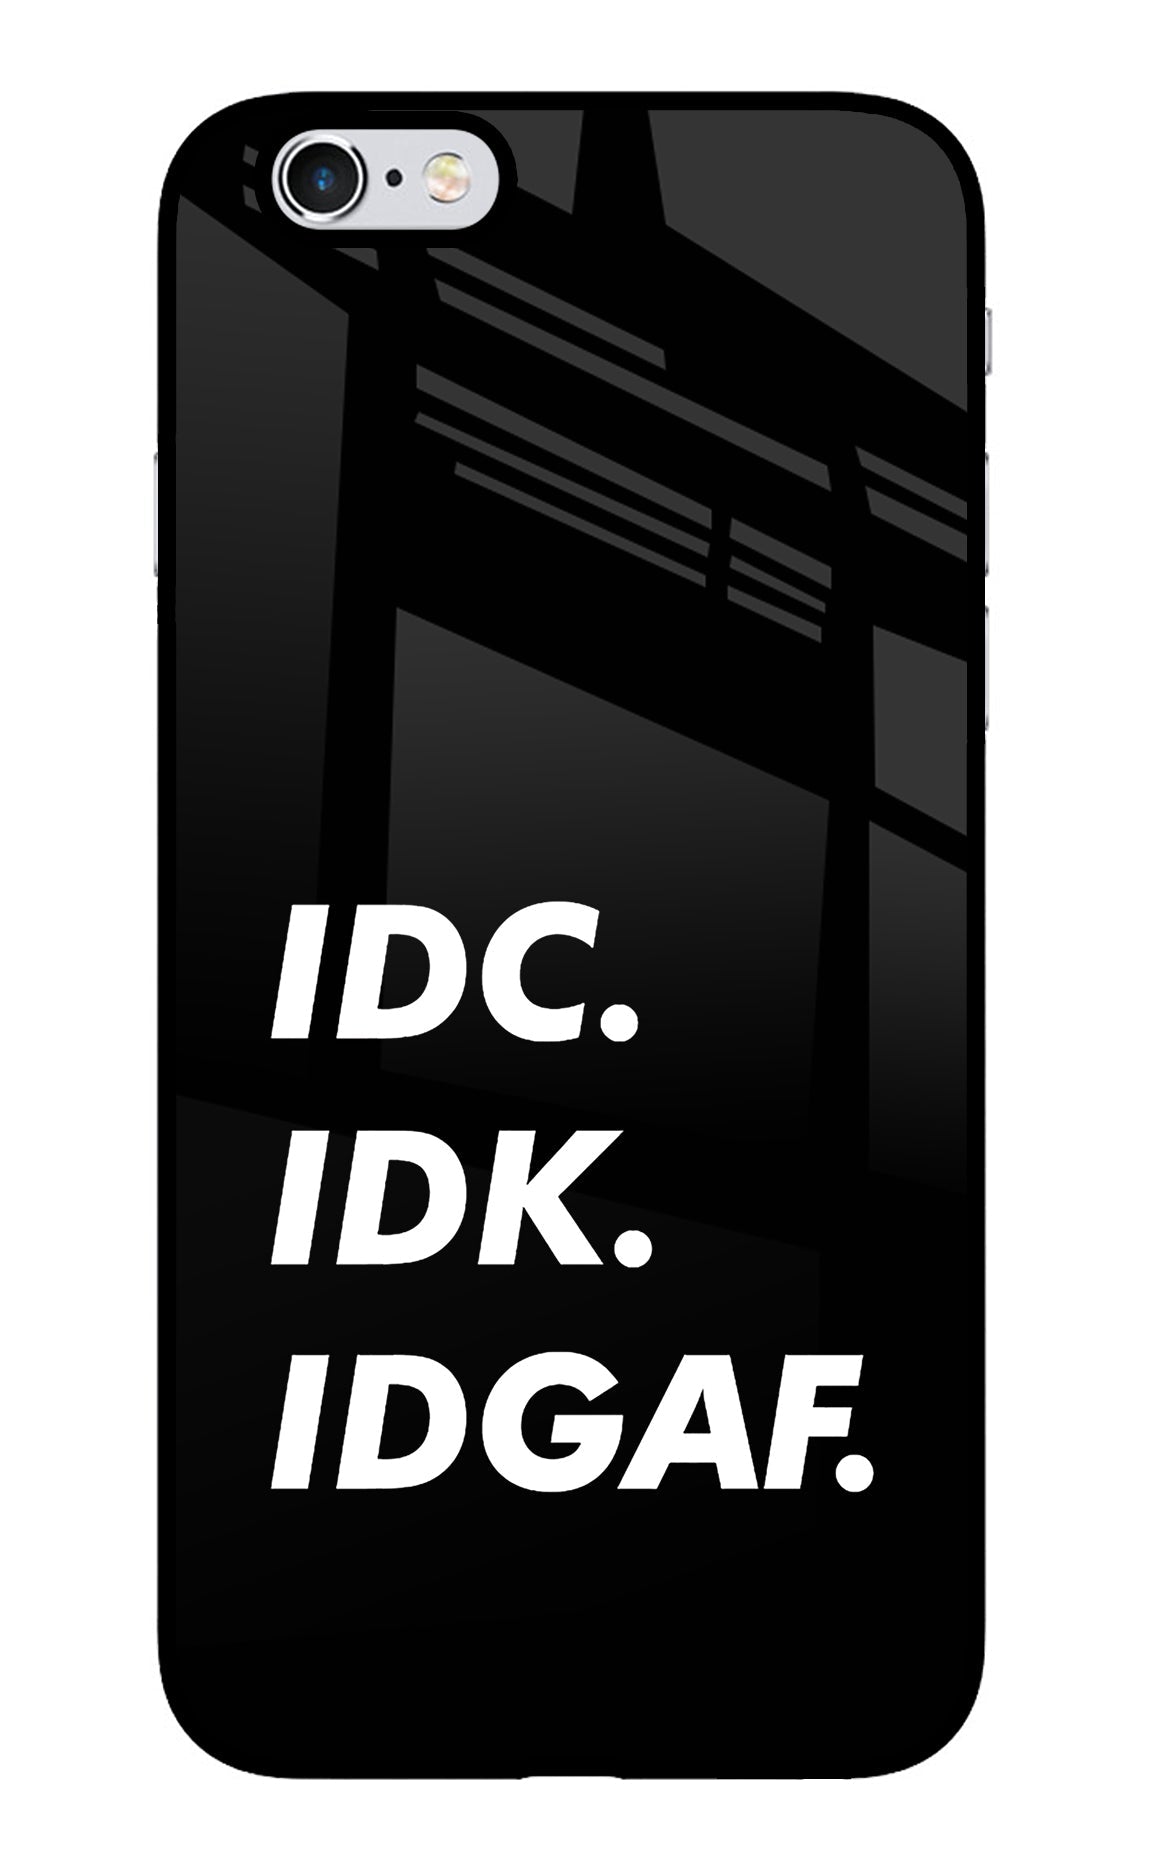 Idc Idk Idgaf iPhone 6/6s Back Cover